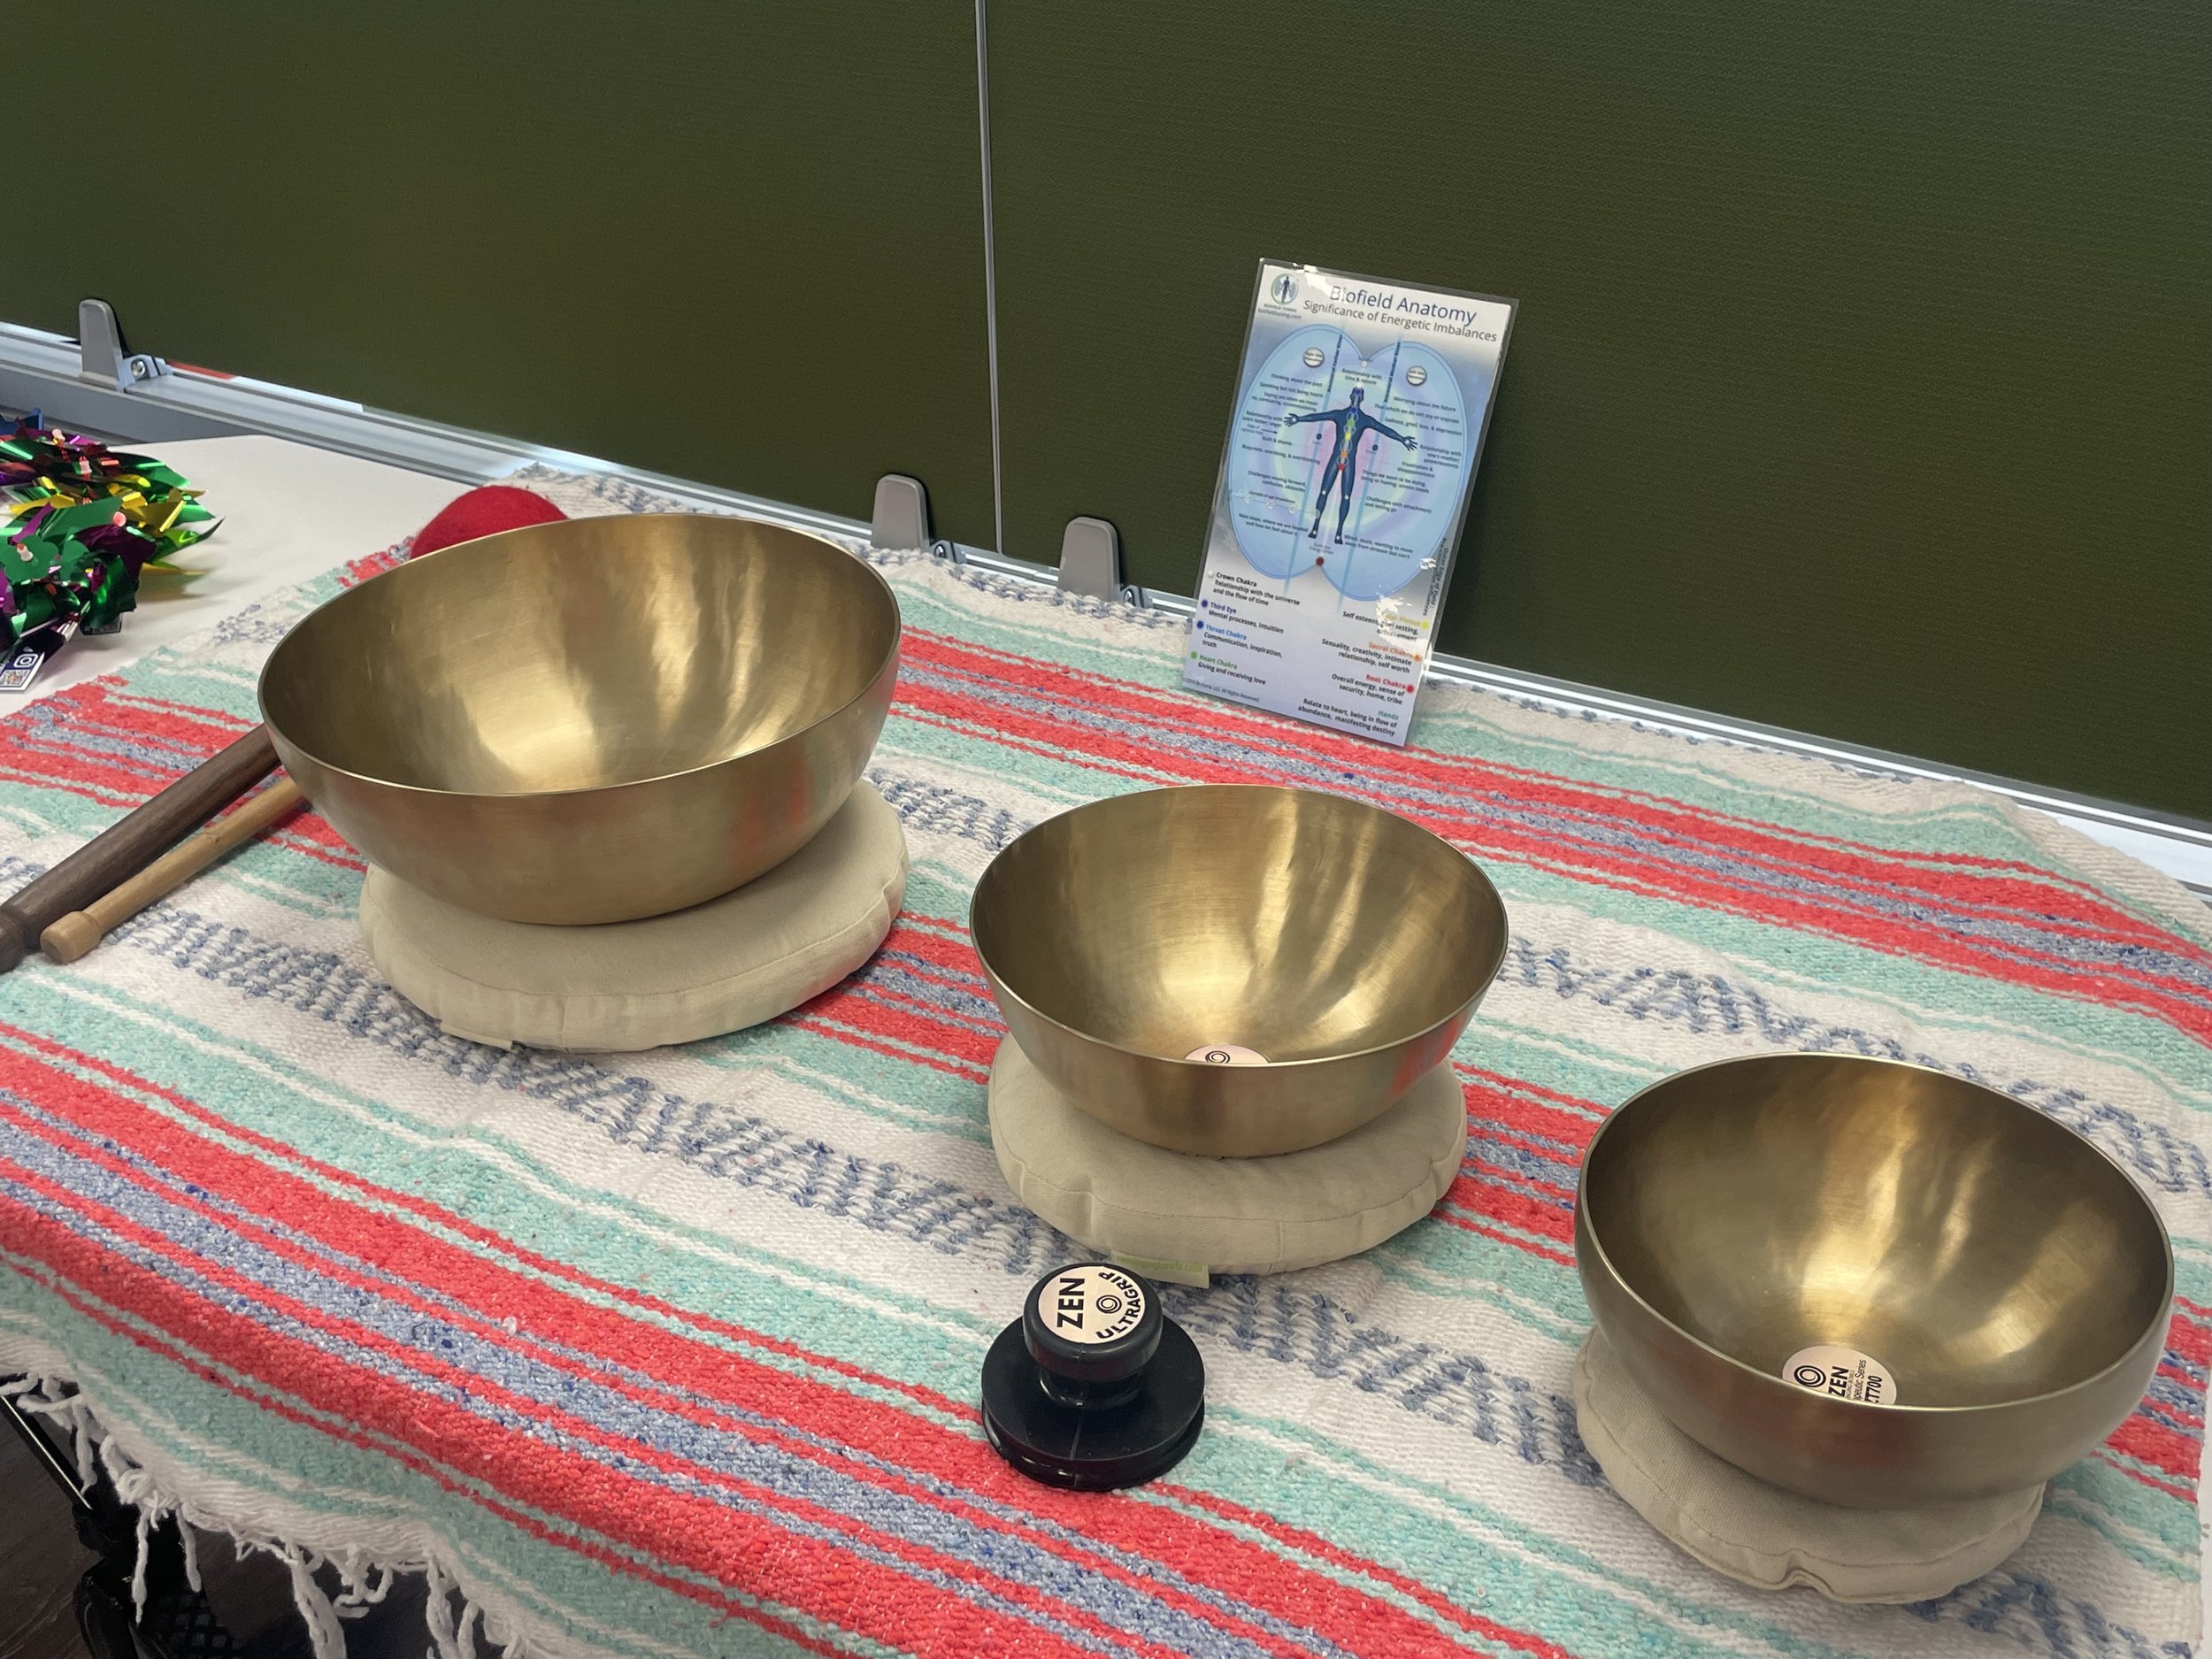 Zen Therapeutic singing bowls